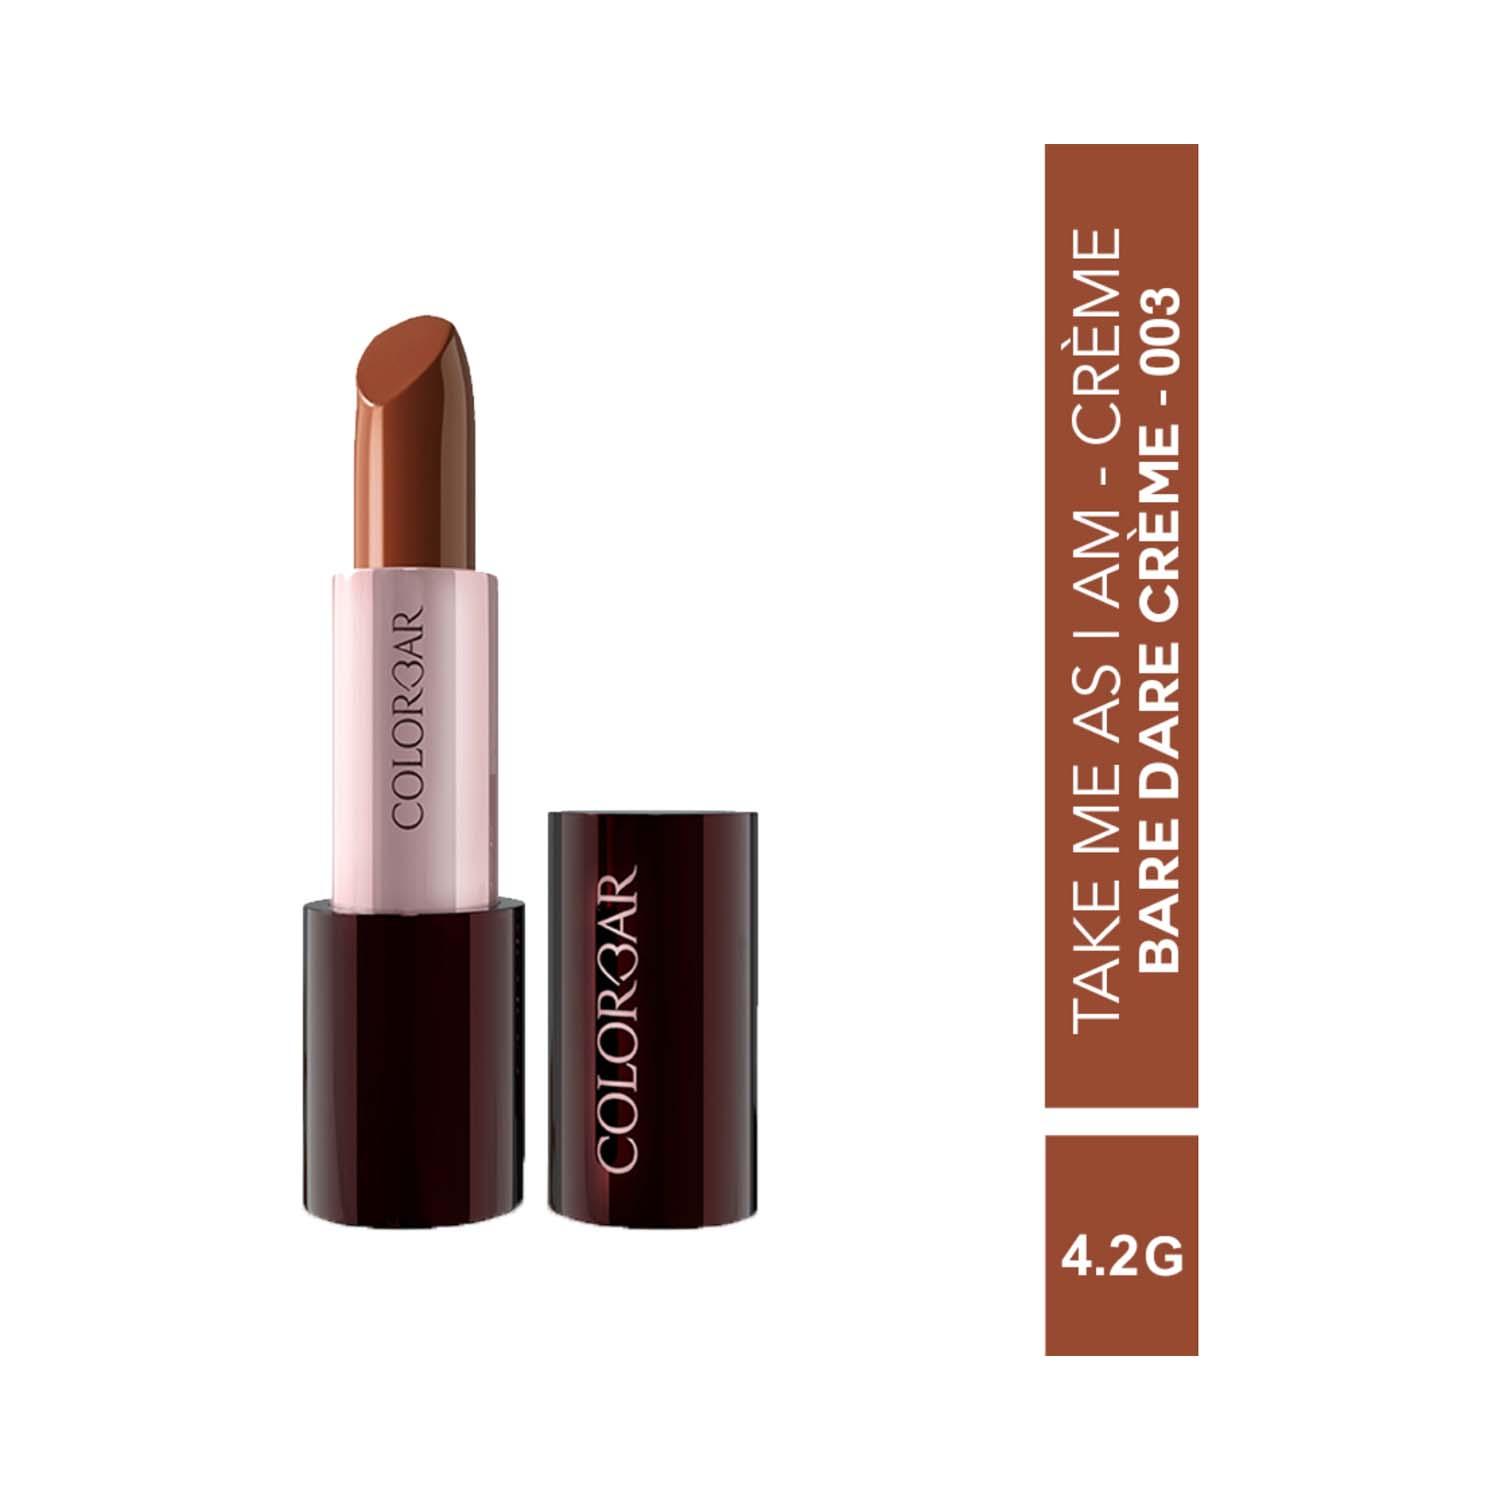 Colorbar | Colorbar Take Me As I Am Vegan Creme Lipstick - Bare Dare Creme - [003] (4.2 g)